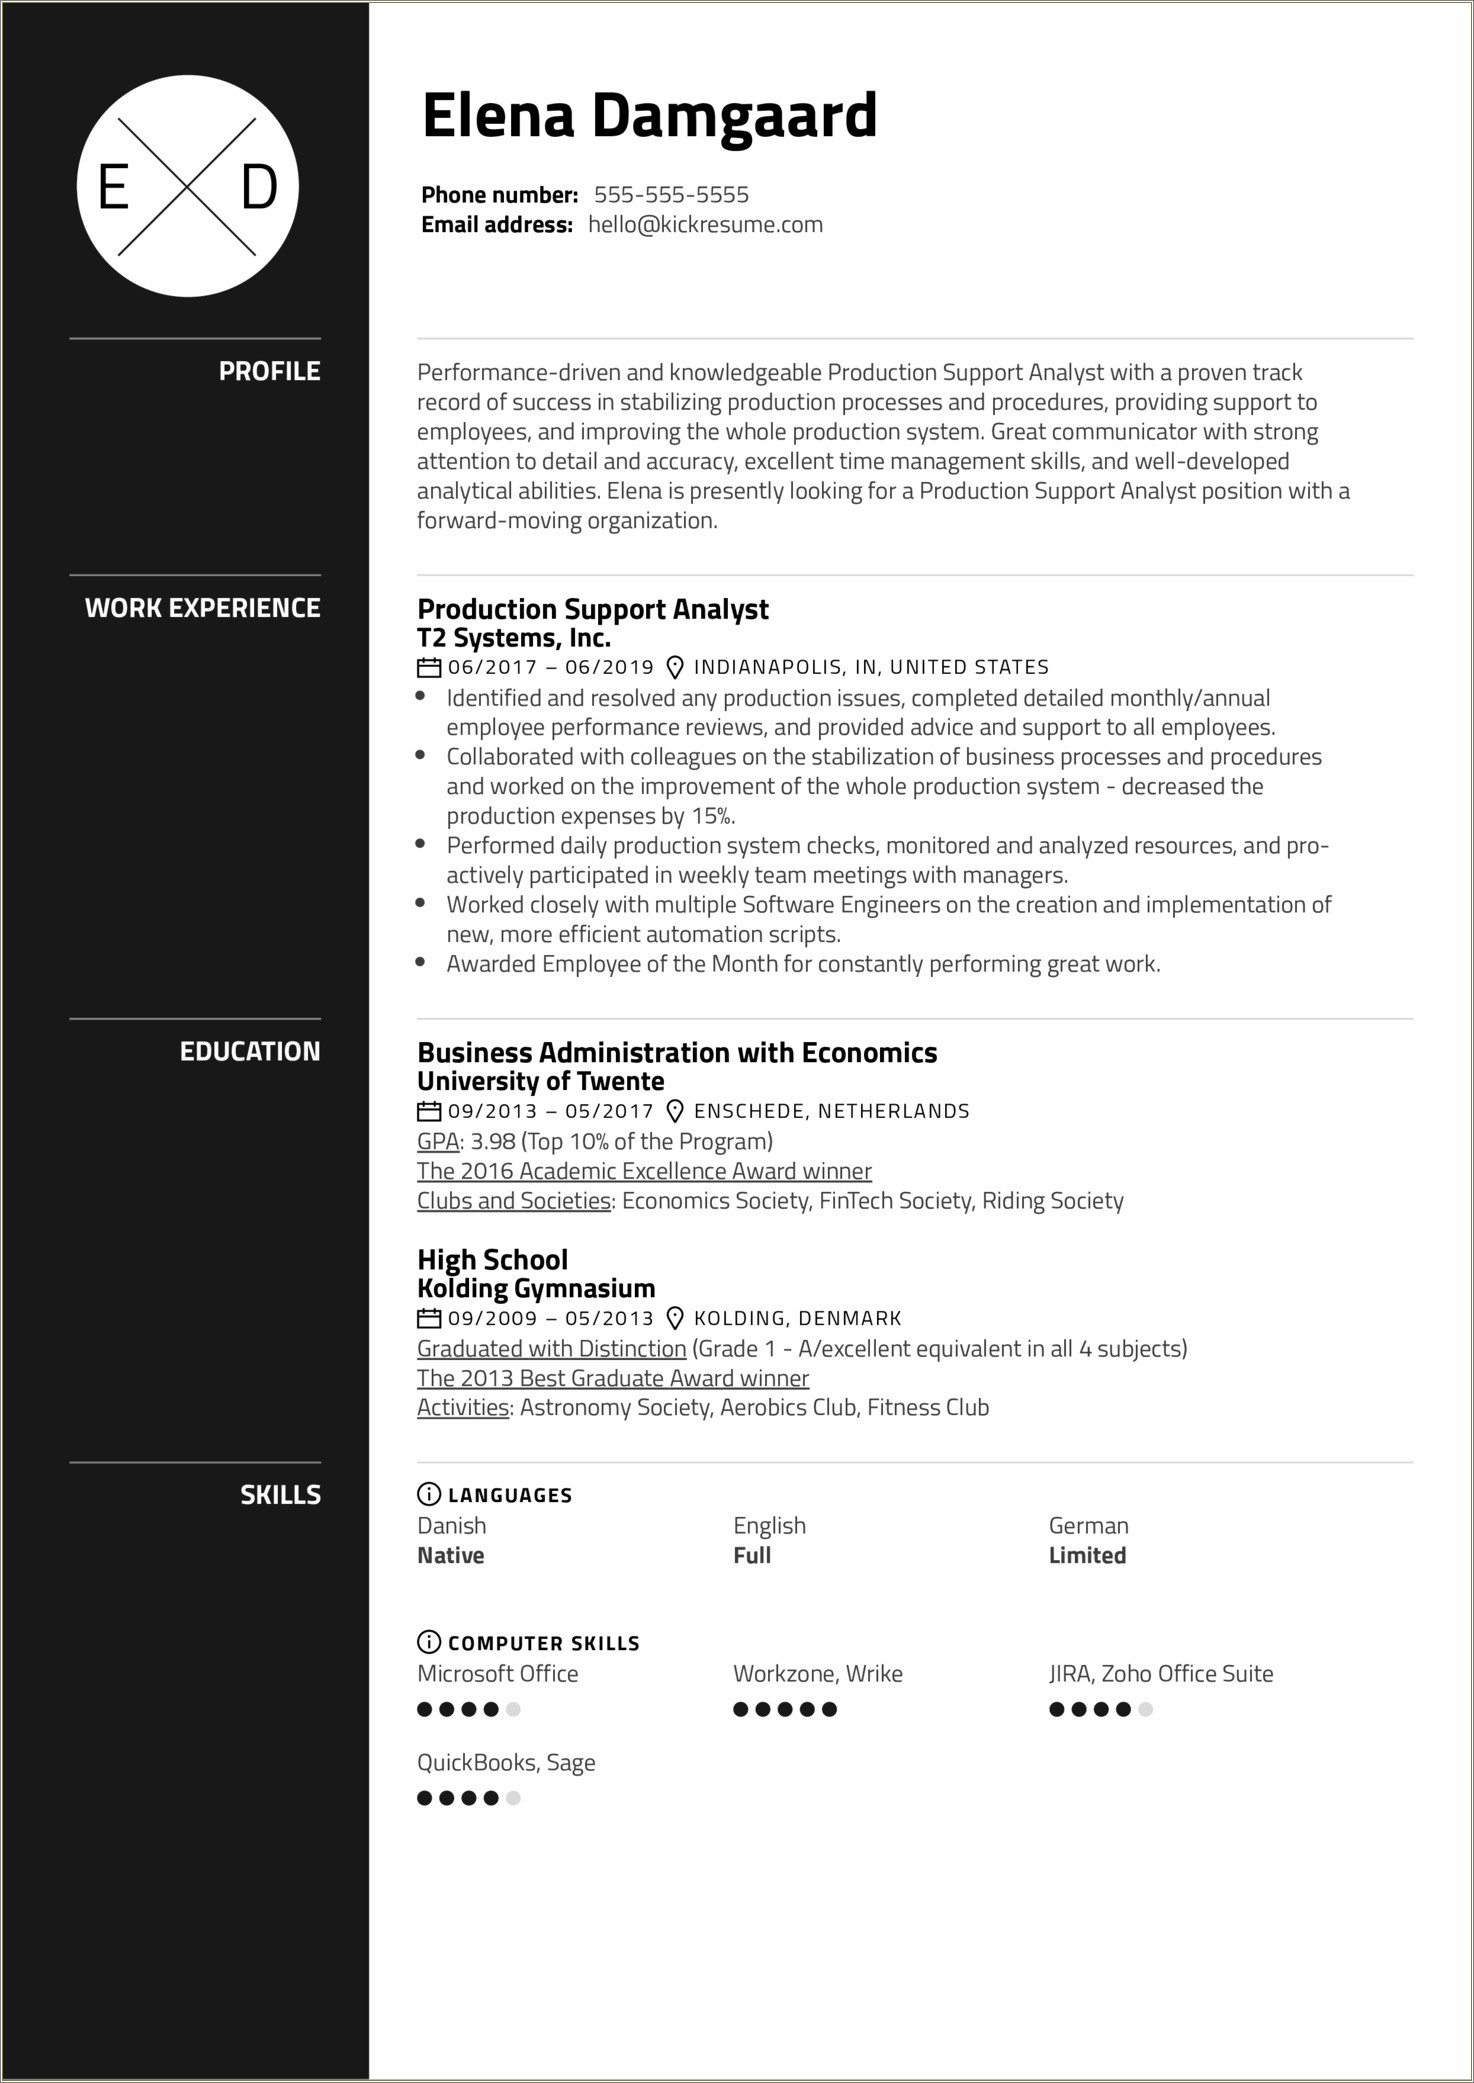 Sample Resume Of Help Desk Analyst